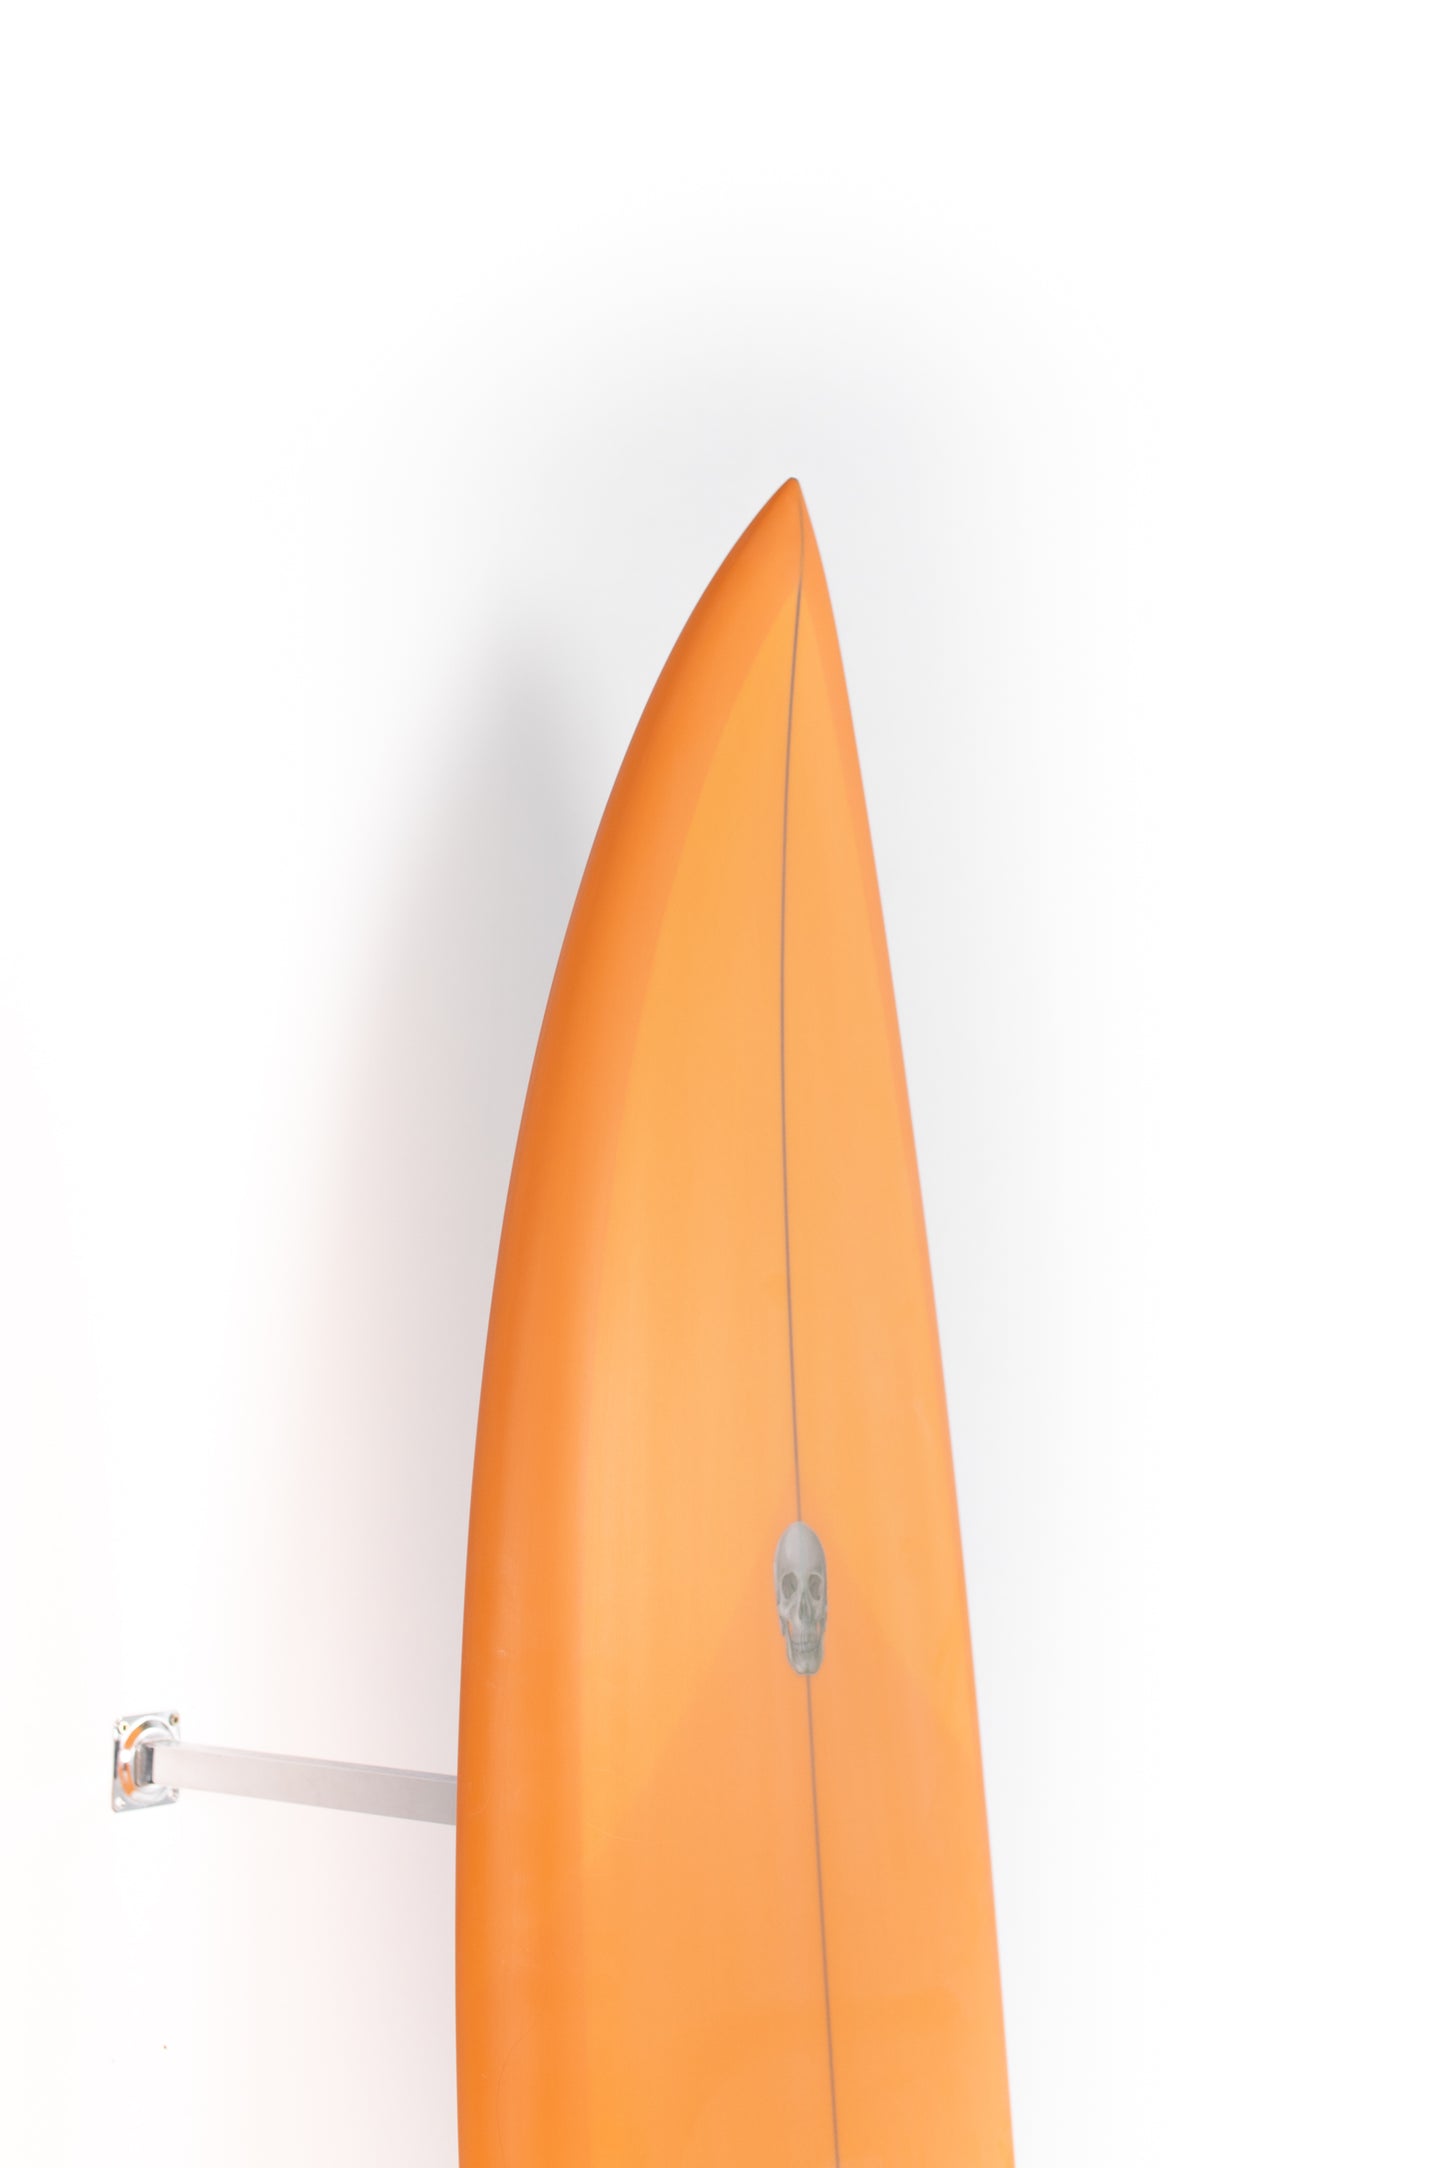 Christenson Surfboards - LANE SPLITTER | Buy at PUKAS SURF SHOP